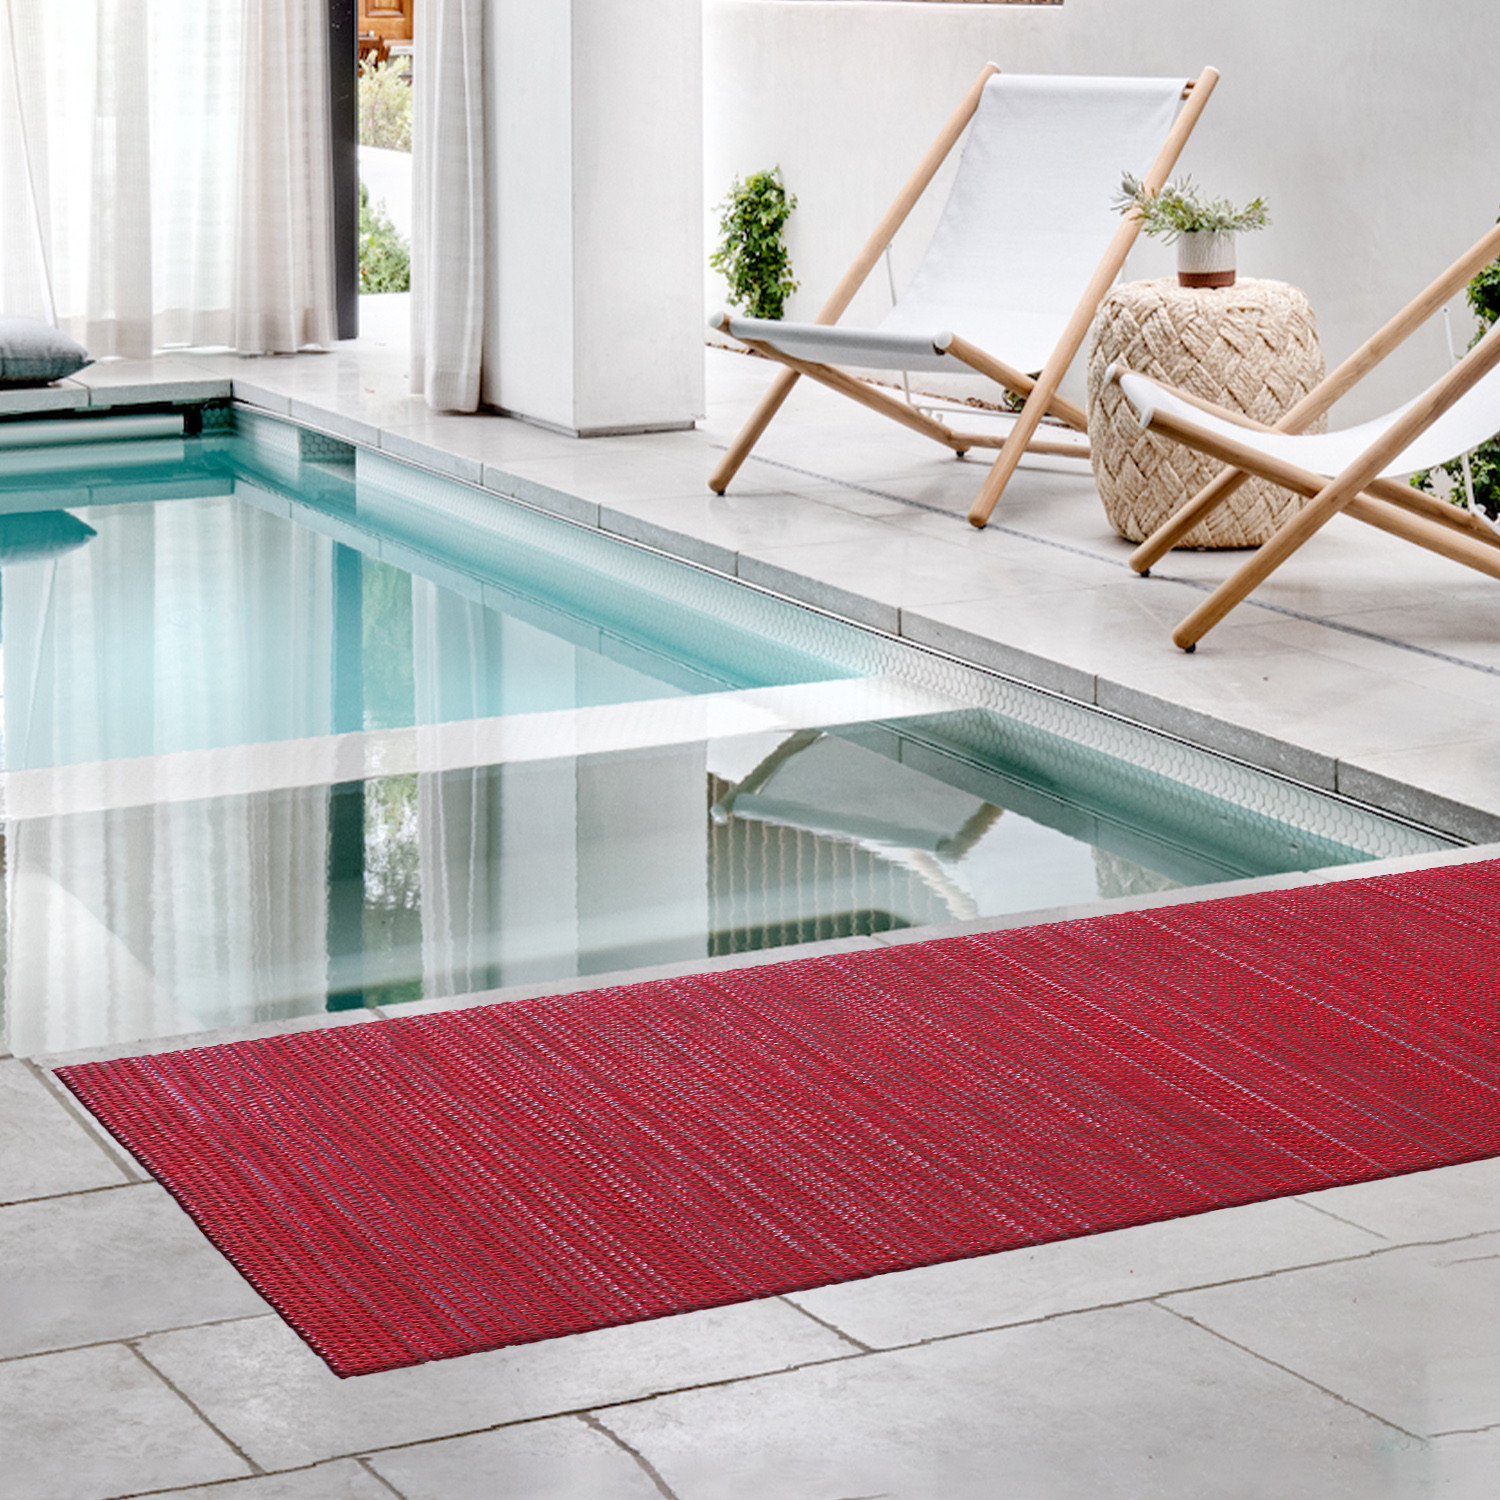 Kuber Industries Rubber Waterproof Anti-Skid Swimming Pool Mat|Shower Mat|Rainmat For Entrance Area,Bathroom,2 x 14 Feet (Red)